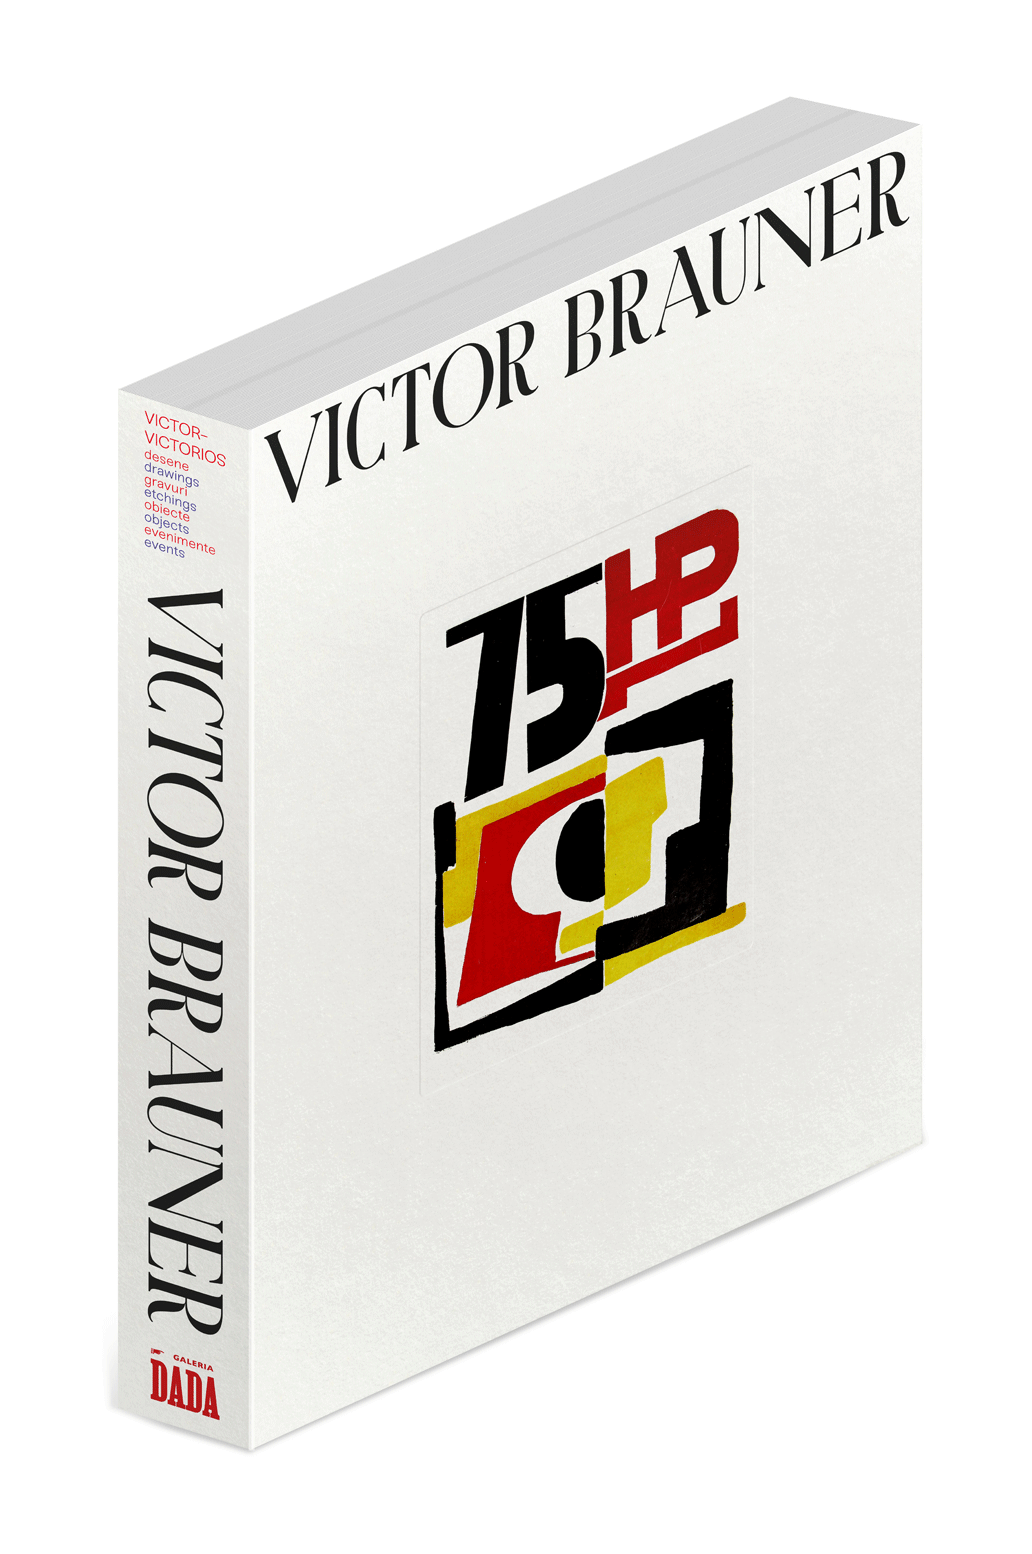 Victor Brauner. Victor-Victorios: Desene, Gravuri, Obiecte, Evenimente